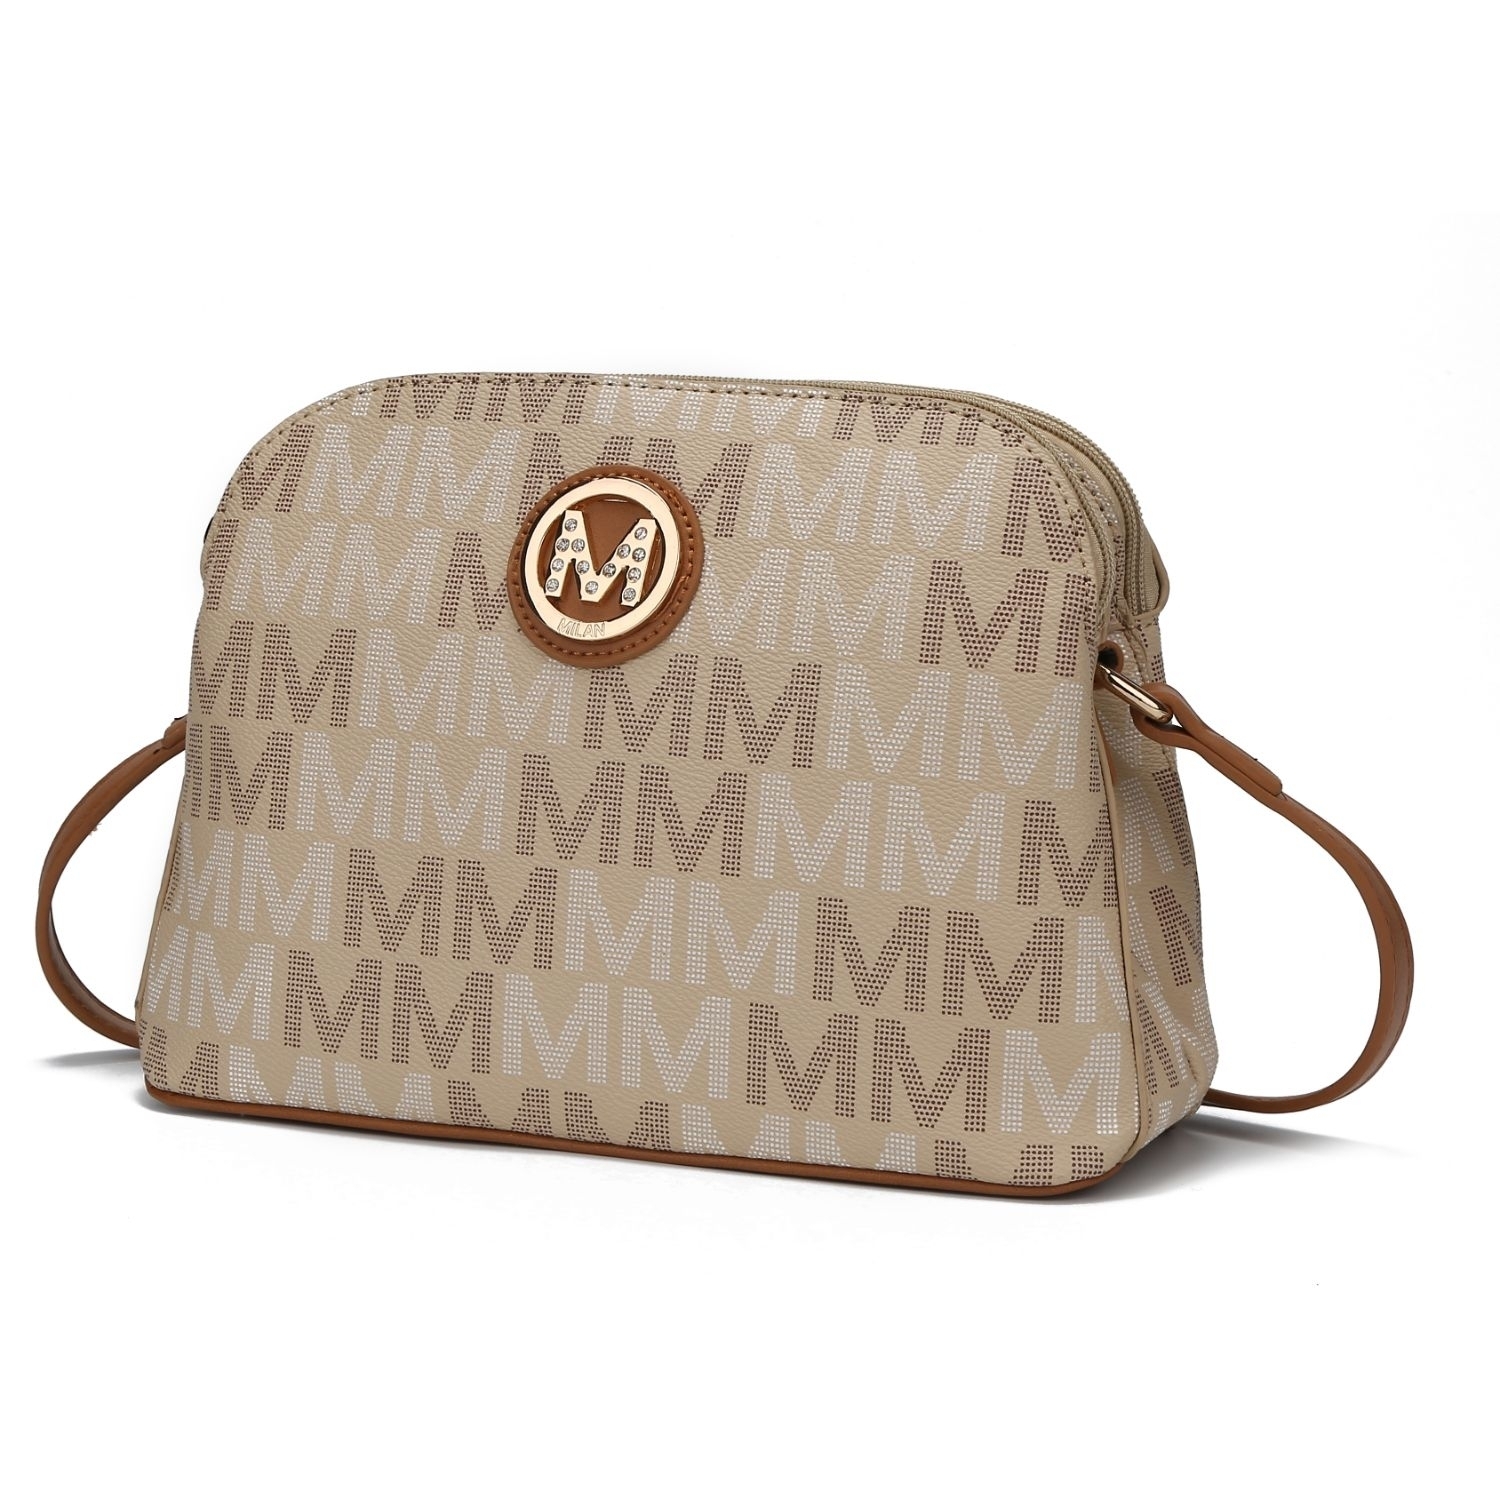 MKF Collection Niecy M Signature Crossbody Handbag By Mia K. - White